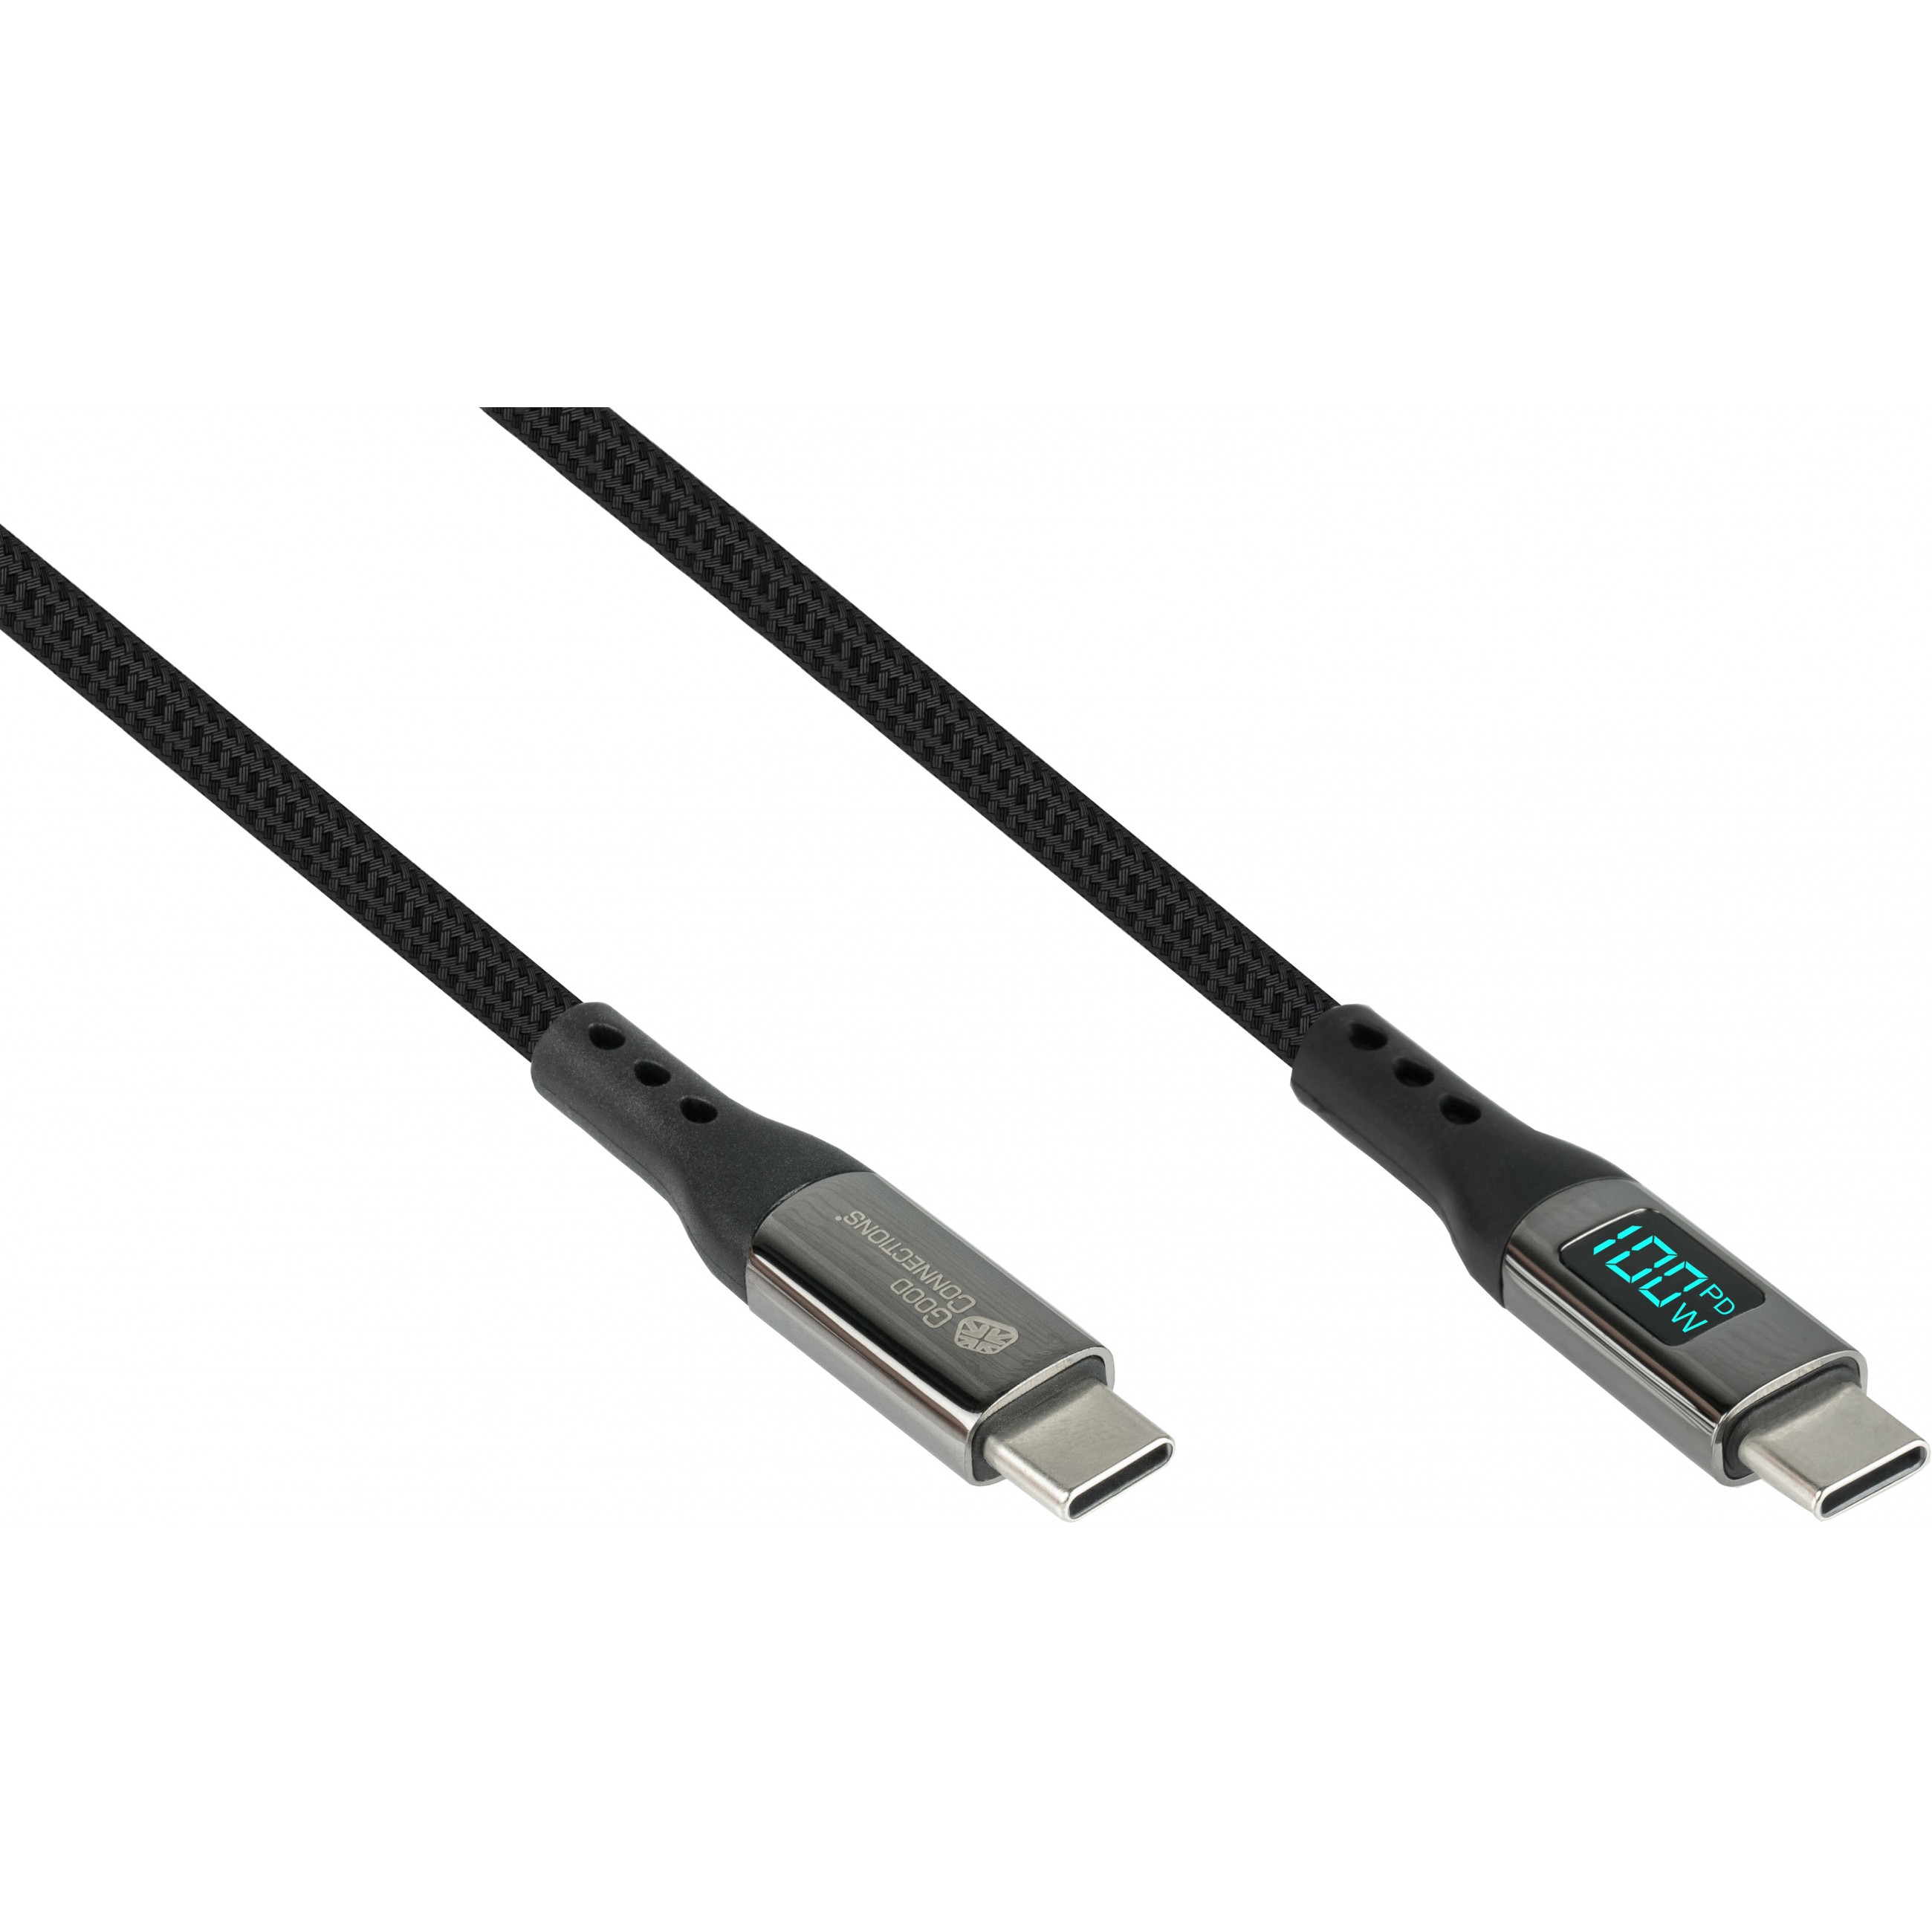 GoodConnections USB-C 2.0 (ST-ST) 1m Anschlusskabel mit Digitalanzeige - 2213-D010S